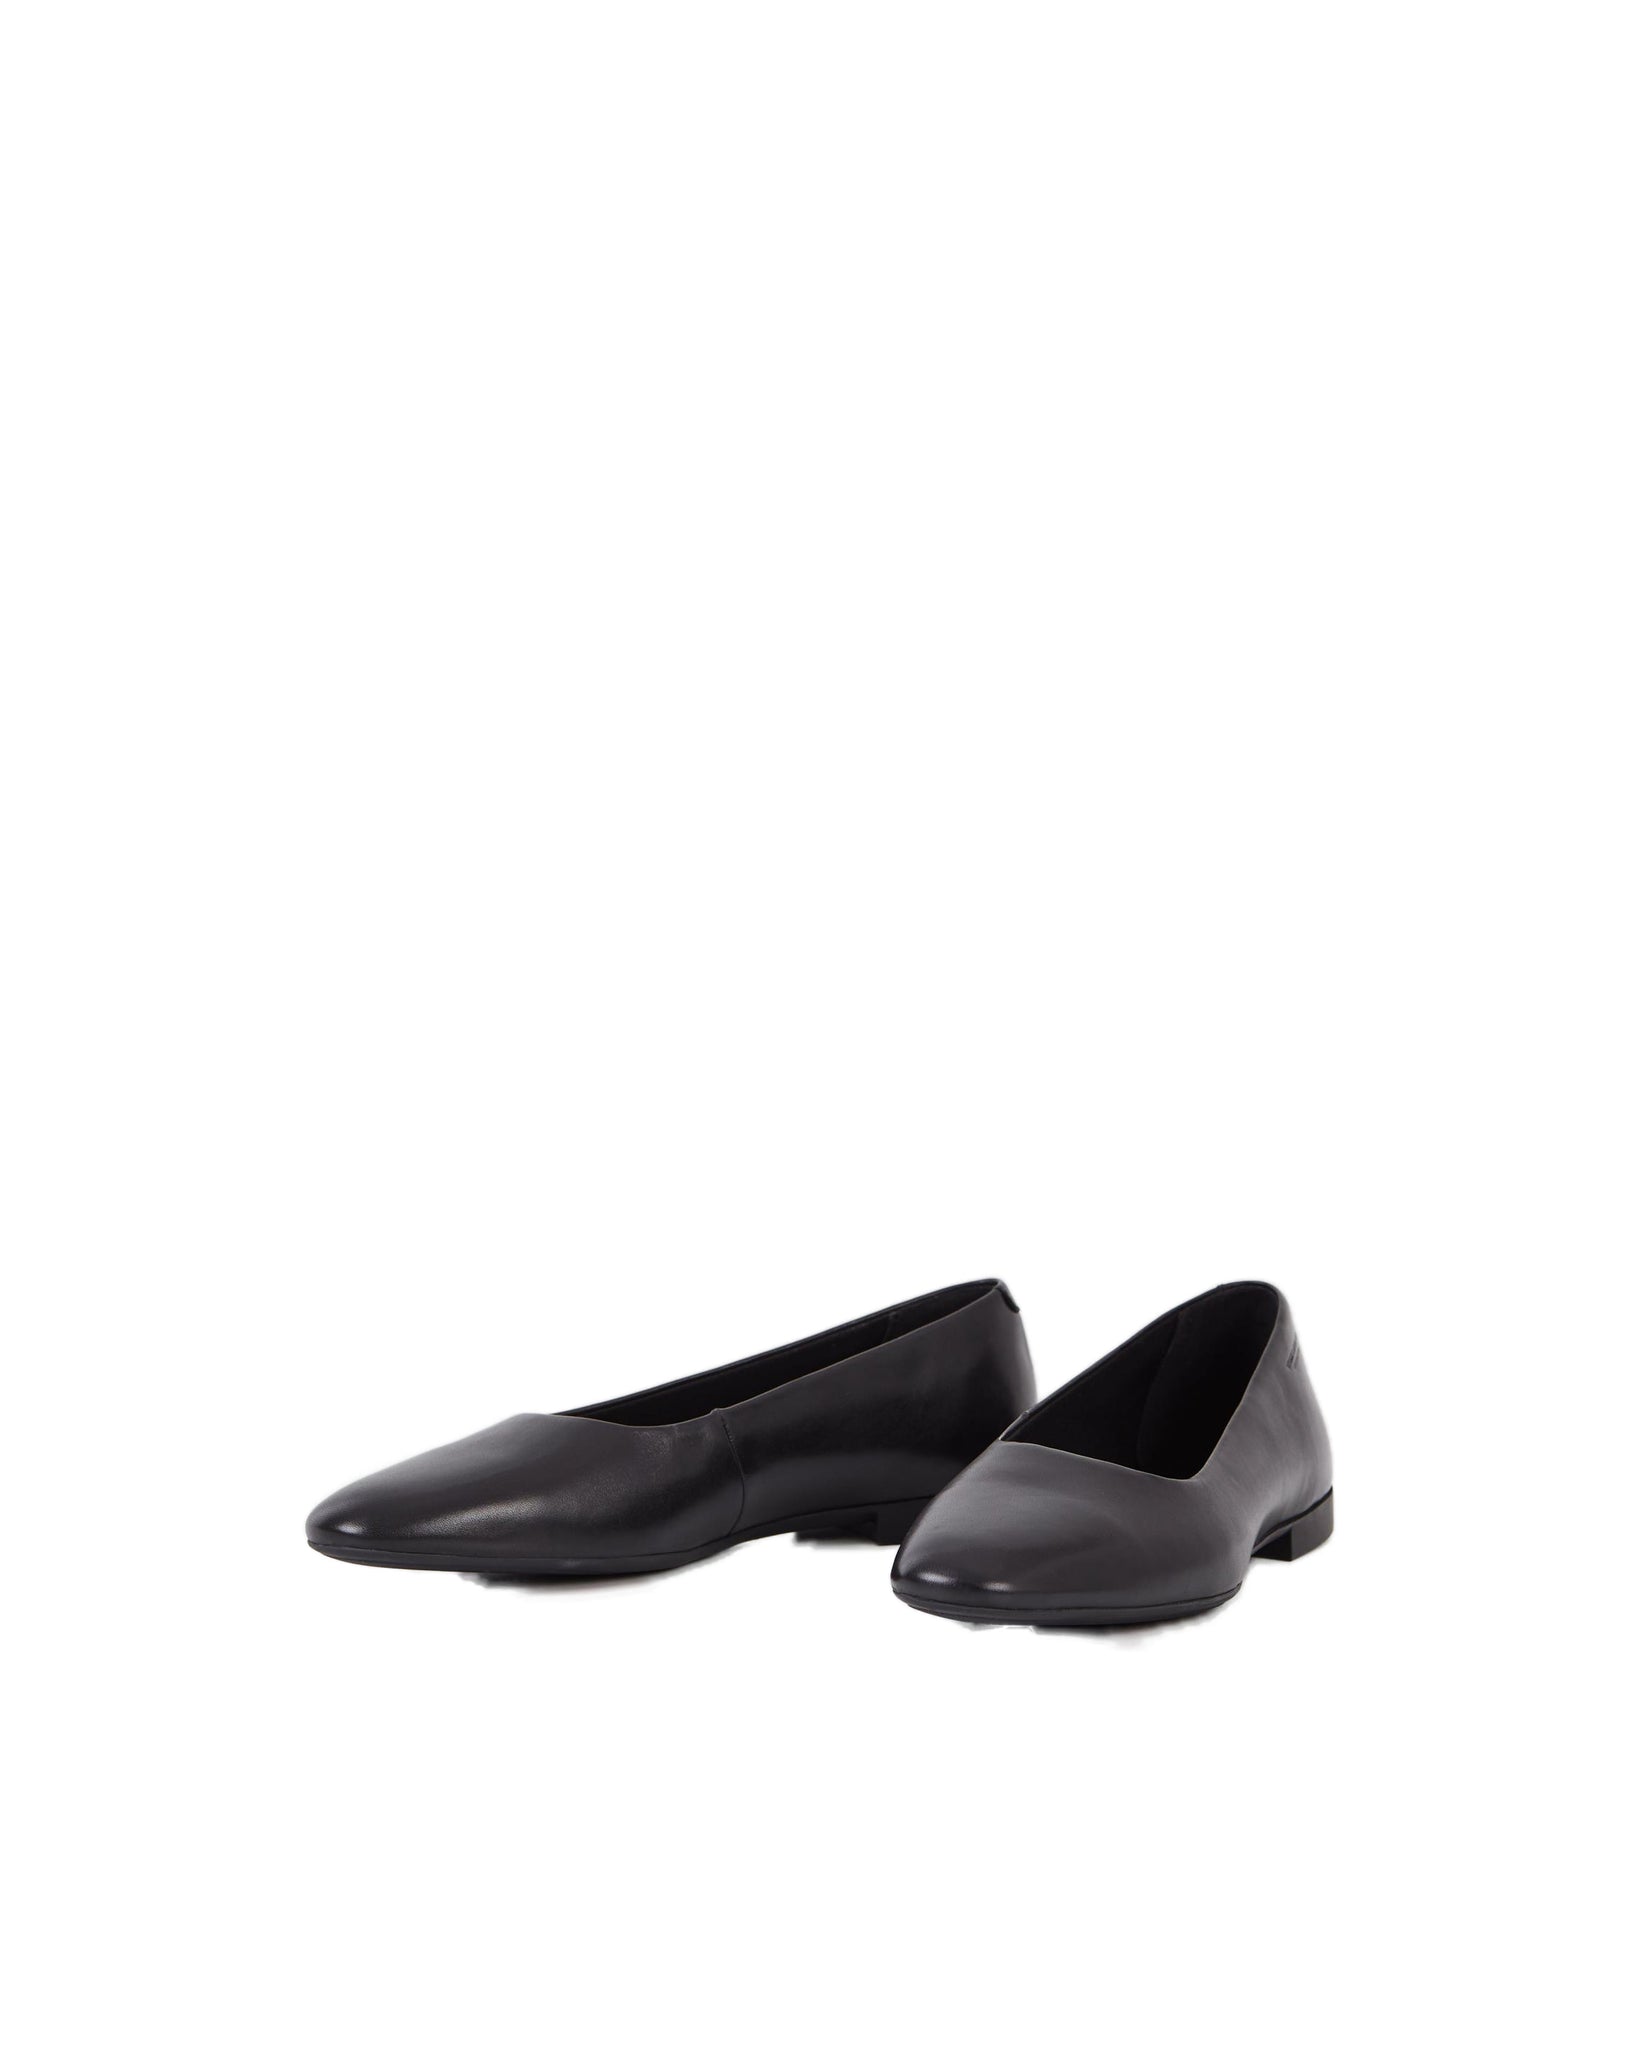 Chaussures Sibel (5758-201-20) - Noir